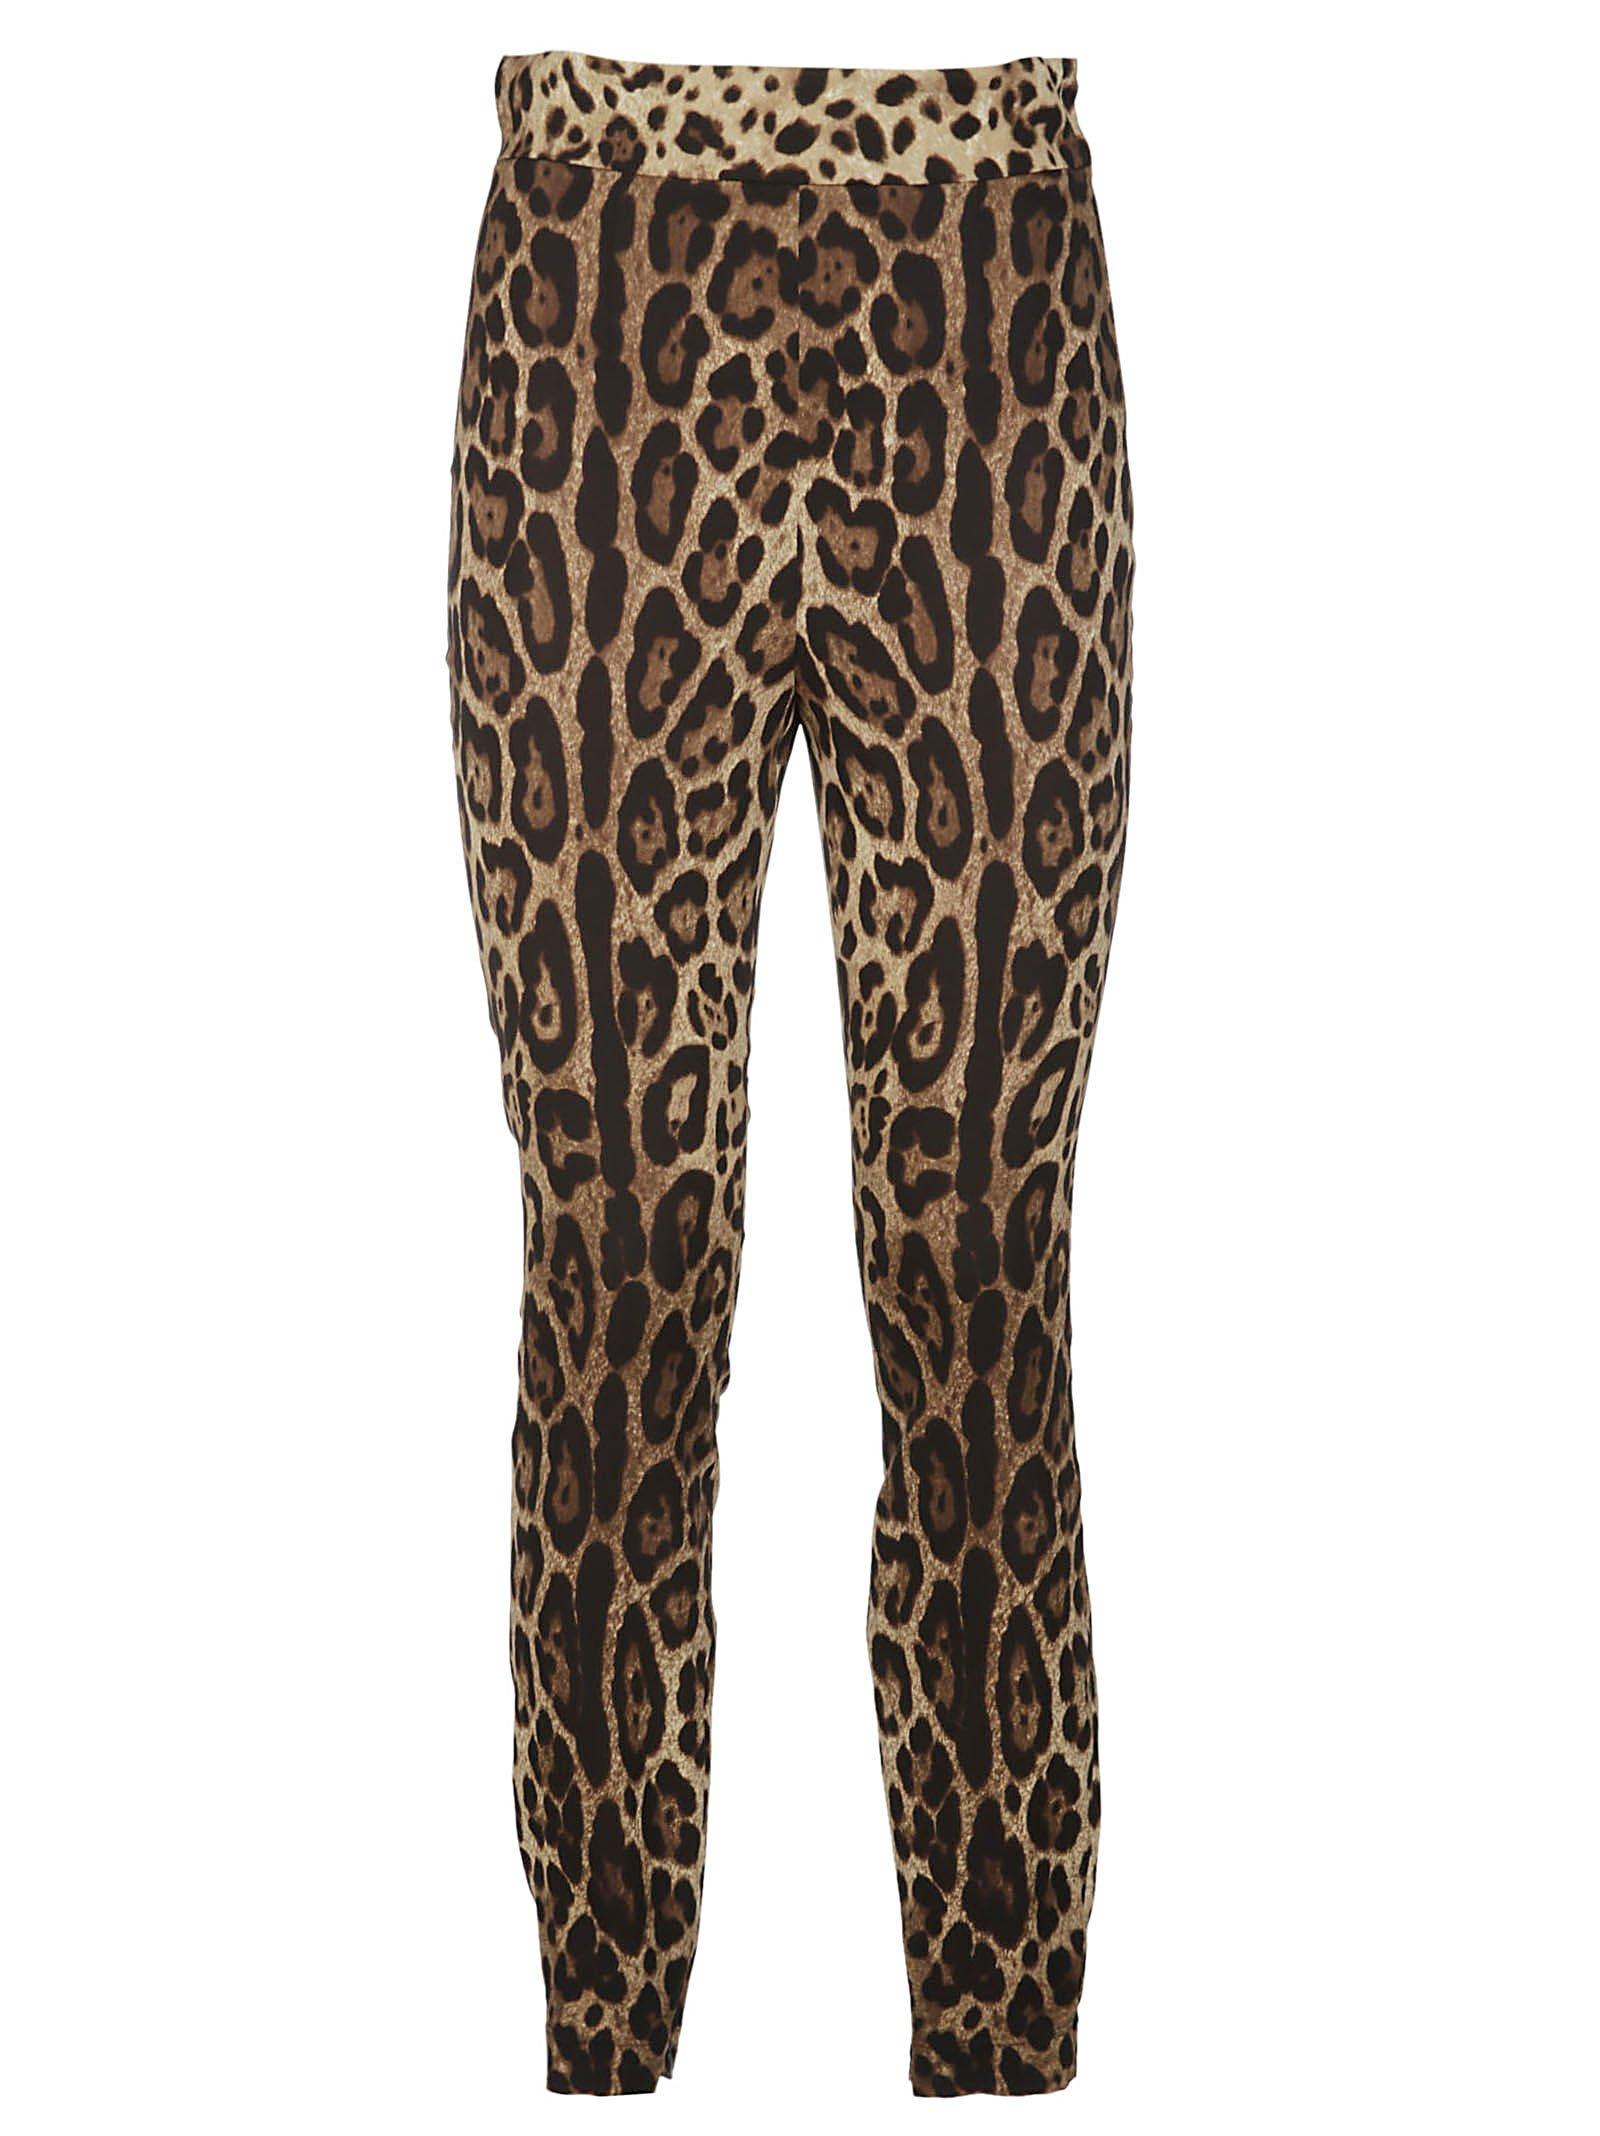 Dolce & Gabbana Silk Leopard Print Leggings in Brown - Lyst